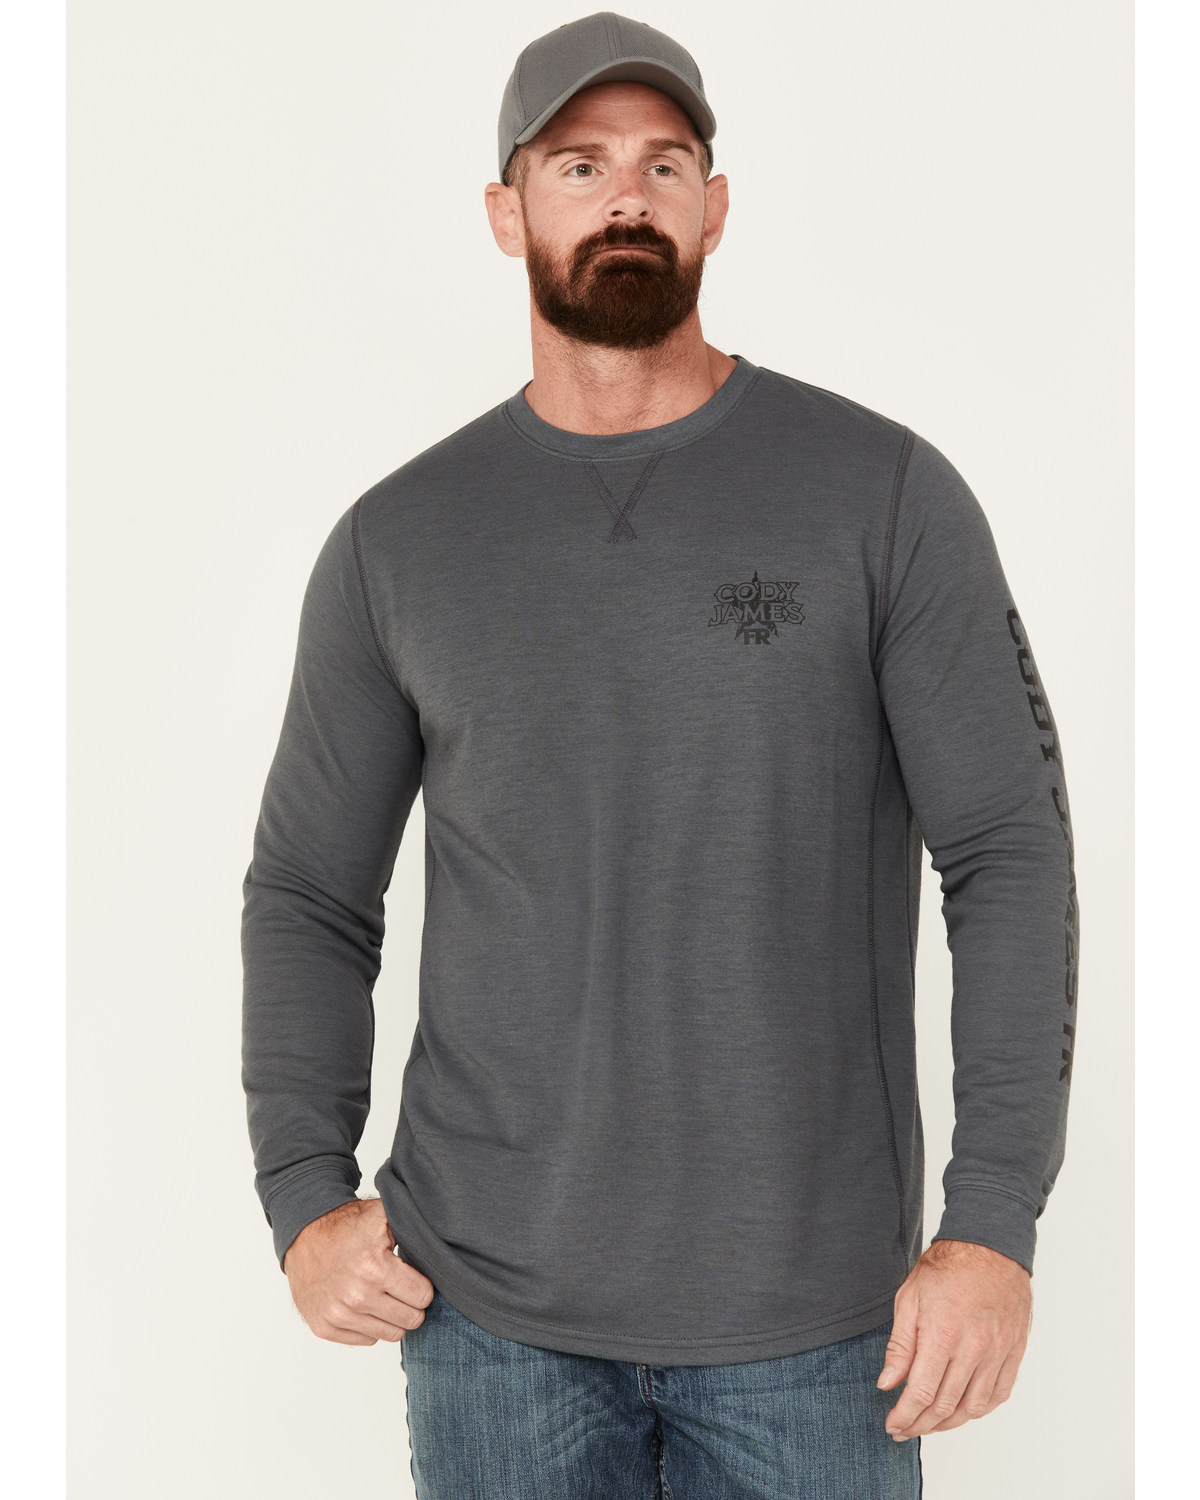 Cody James Men's FR Long Sleeve Graphic Work T-Shirt